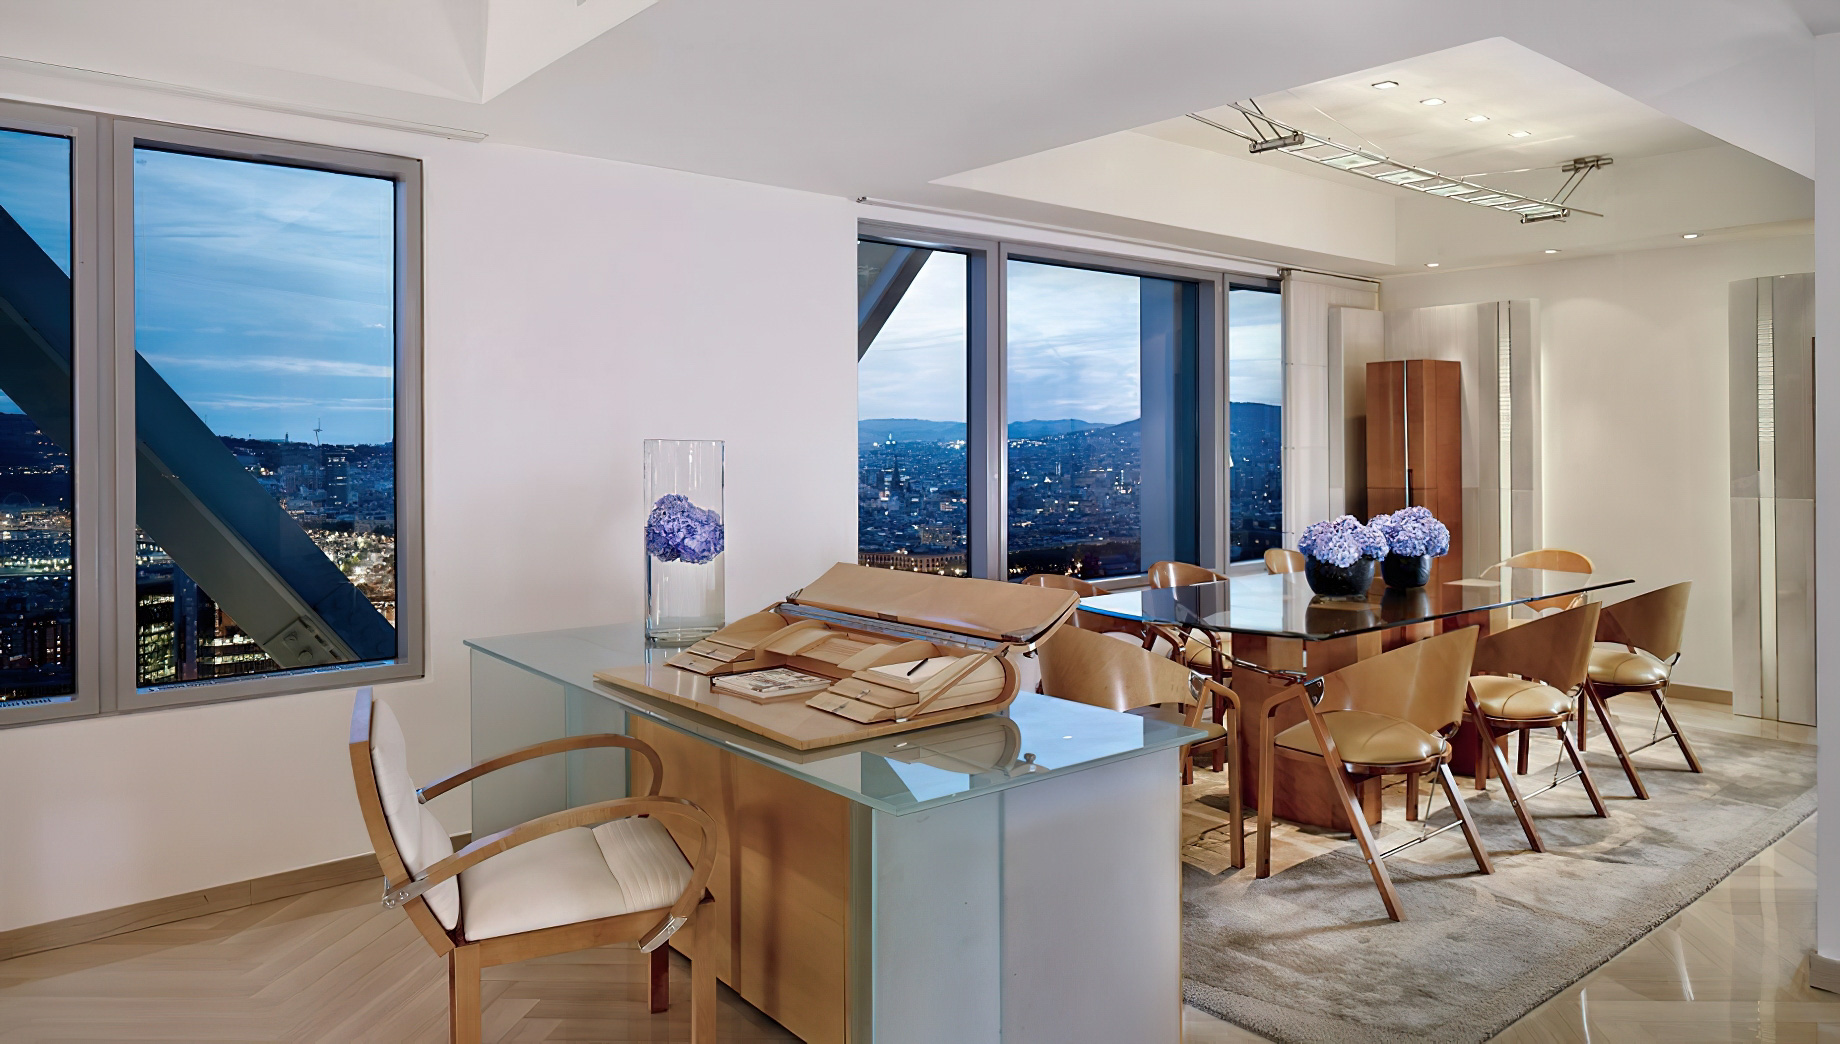 Hotel Arts Barcelona Ritz-Carlton - Barcelona, Spain - The Penthouse Two Bedroom Dining Area